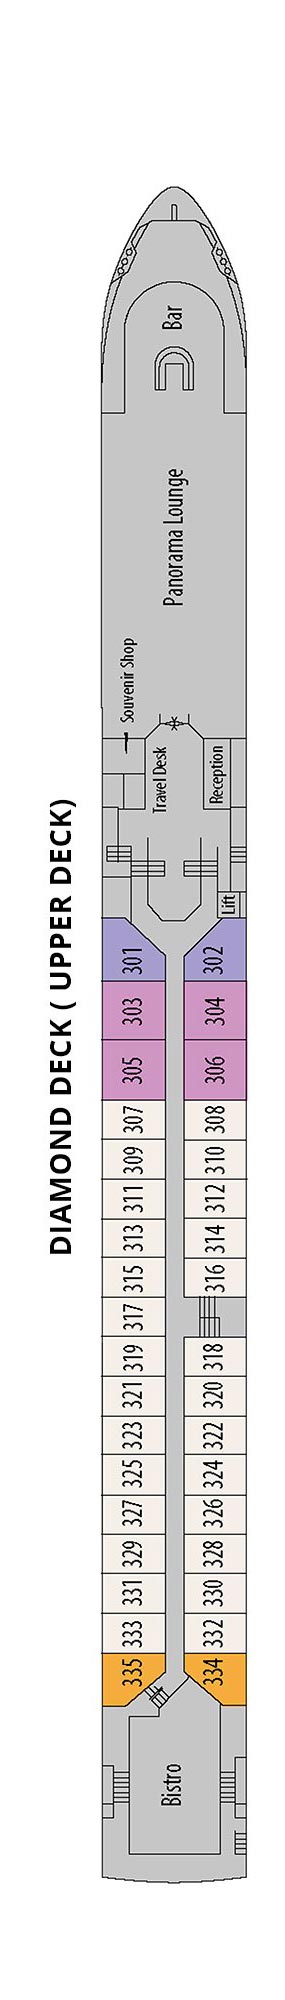 Upper Deck Deck Plan